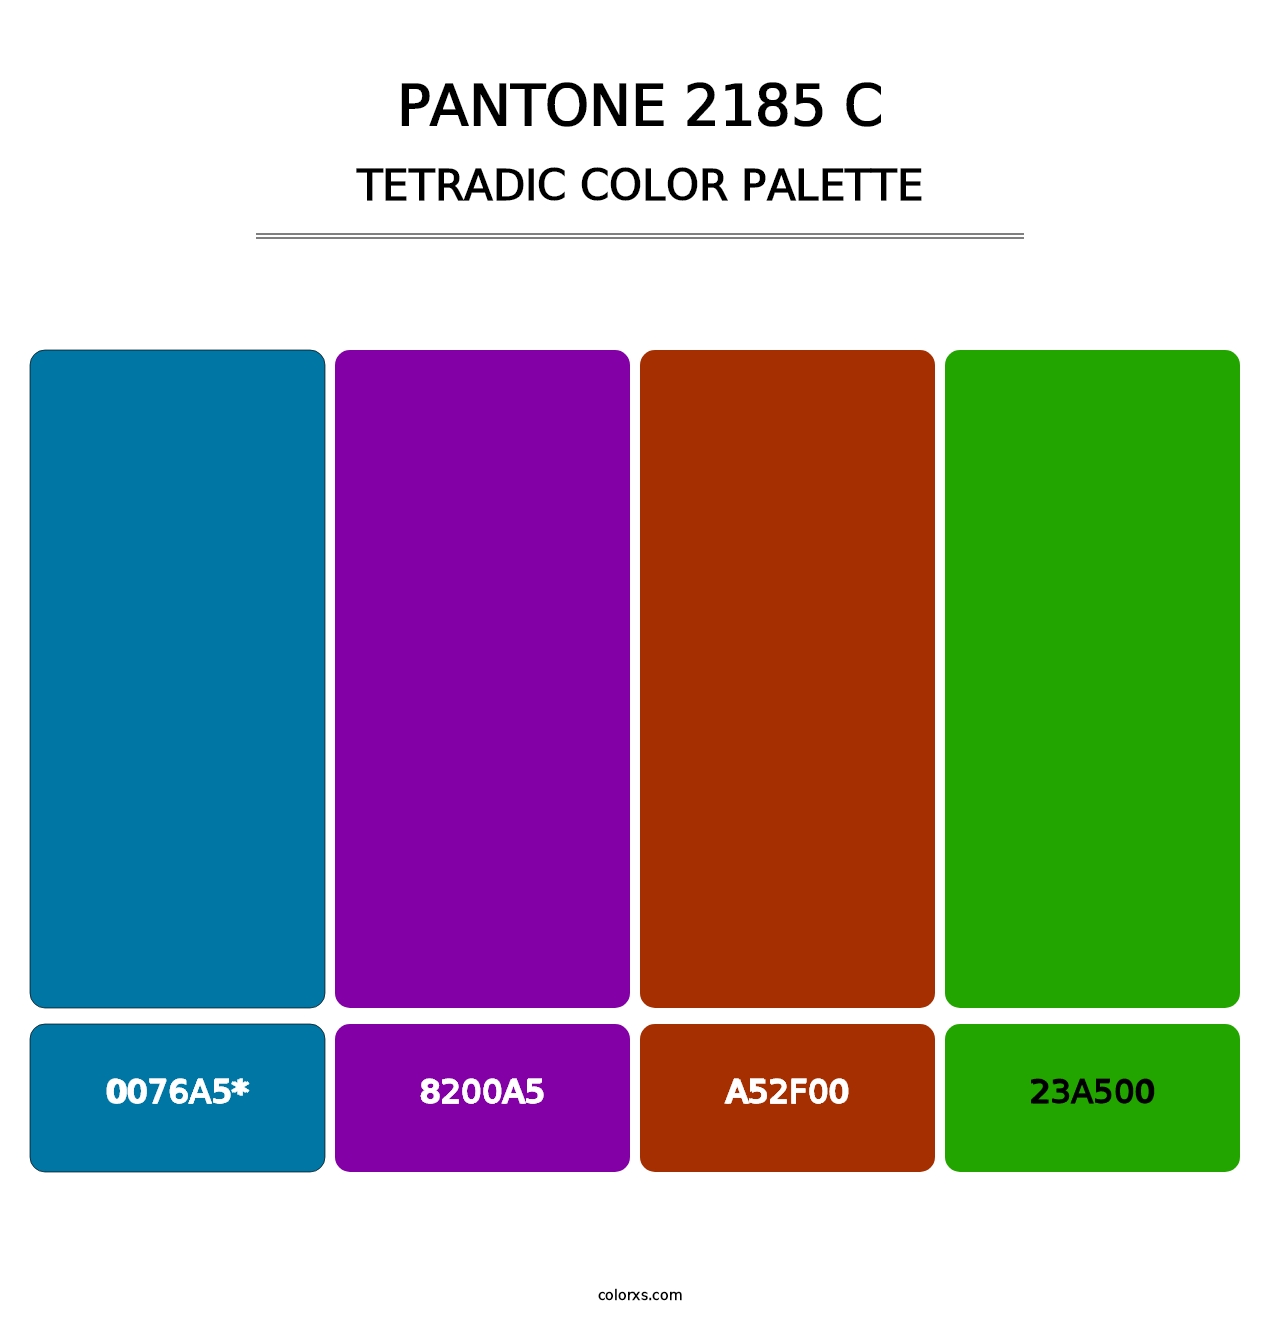 PANTONE 2185 C - Tetradic Color Palette